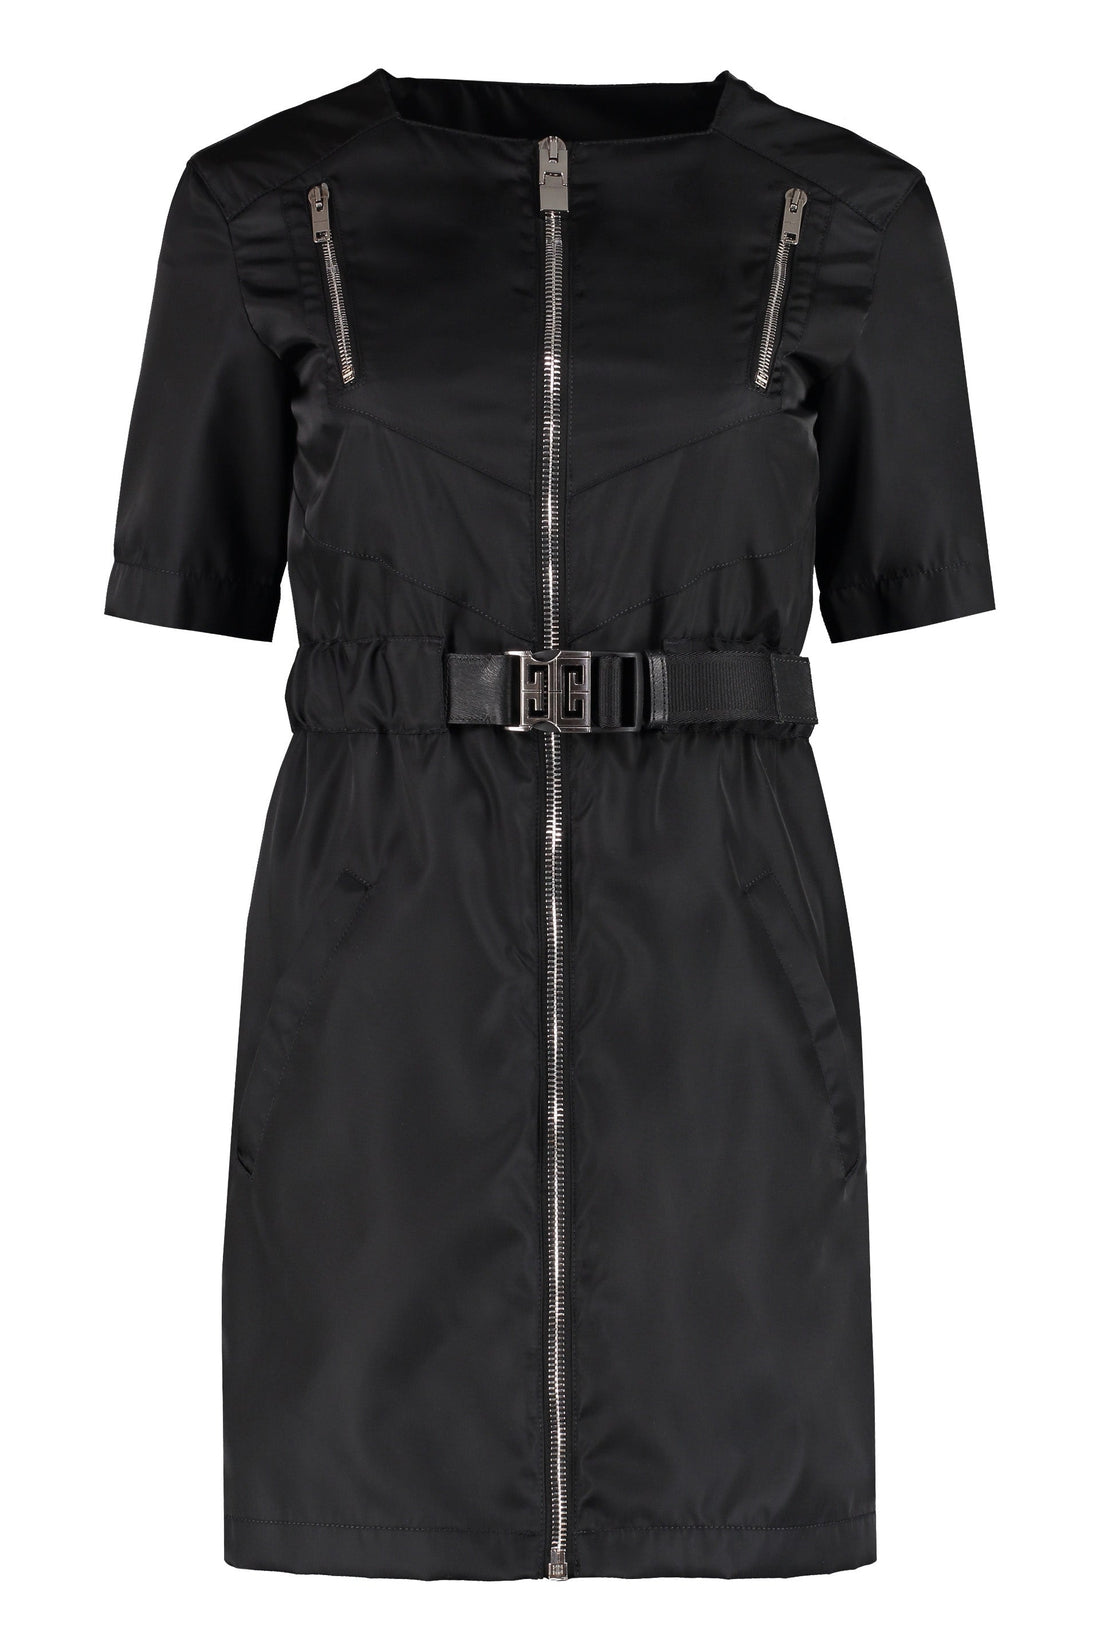 Givenchy-OUTLET-SALE-Technical nylon dress-ARCHIVIST